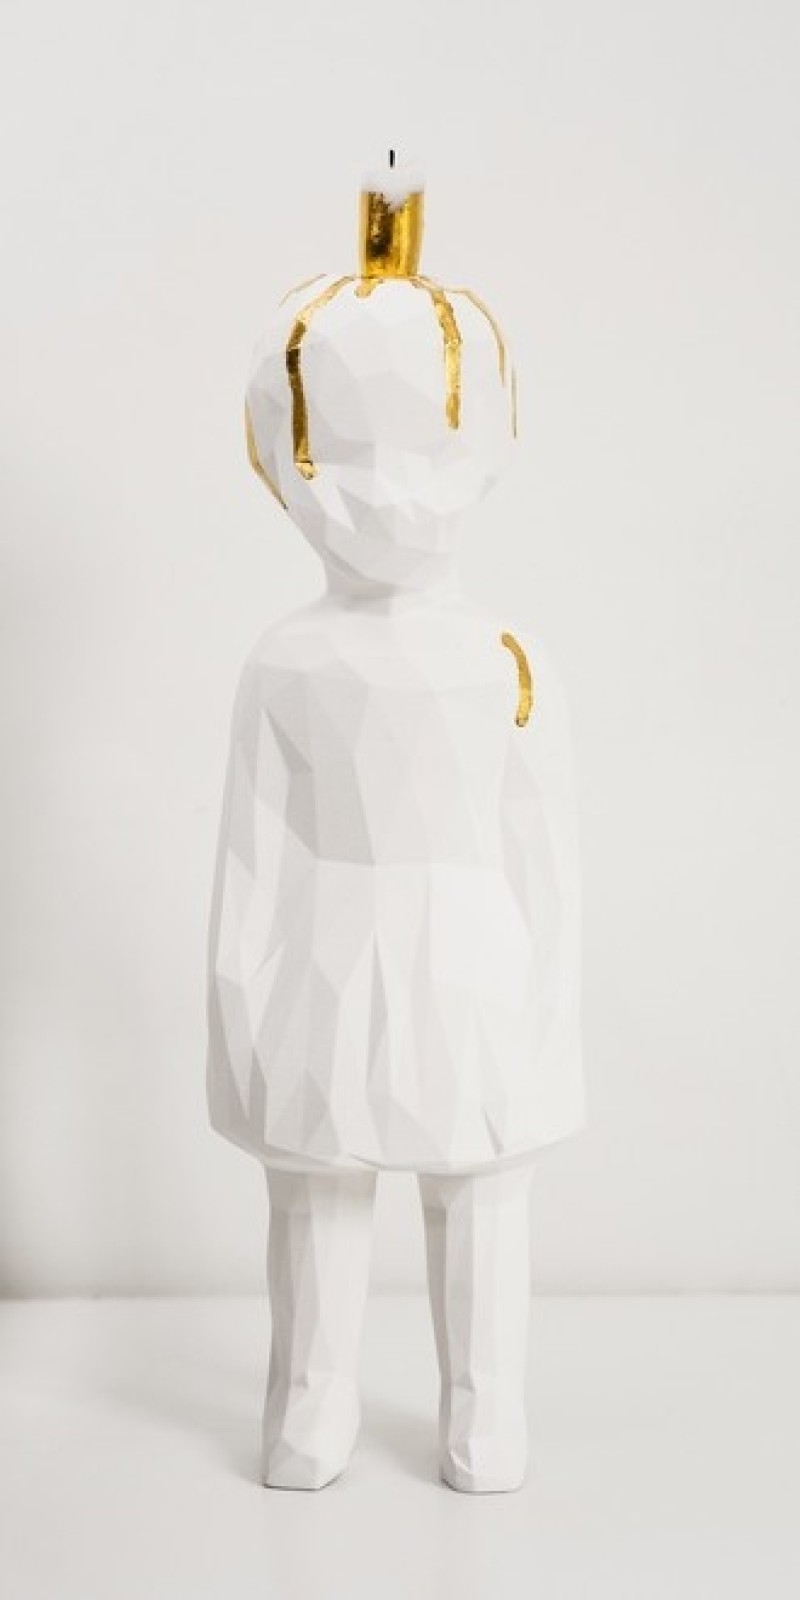 Mo Cornelisse - Big Doll - Golden idea 8/8